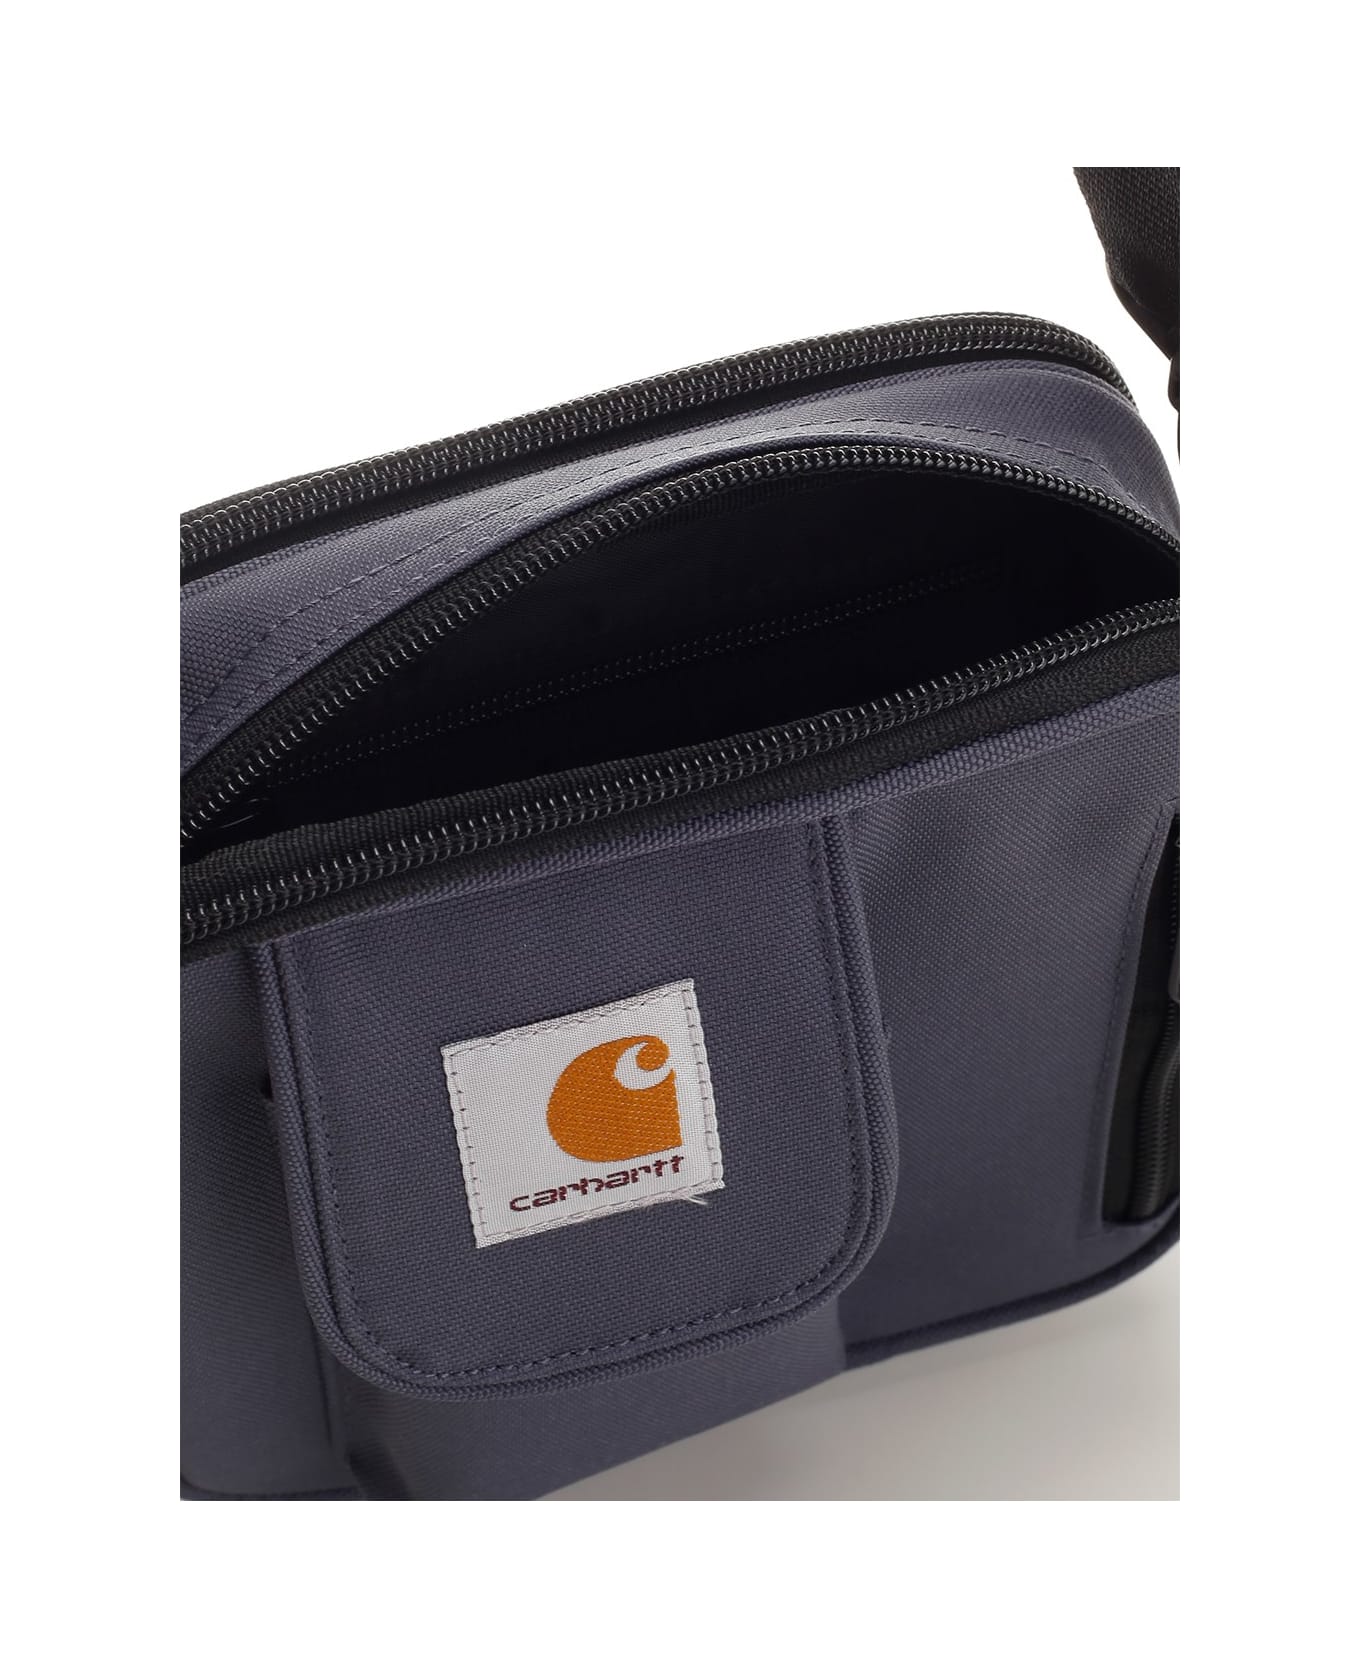 Carhartt Small 'essentials' Crossbody Bag - Grigio